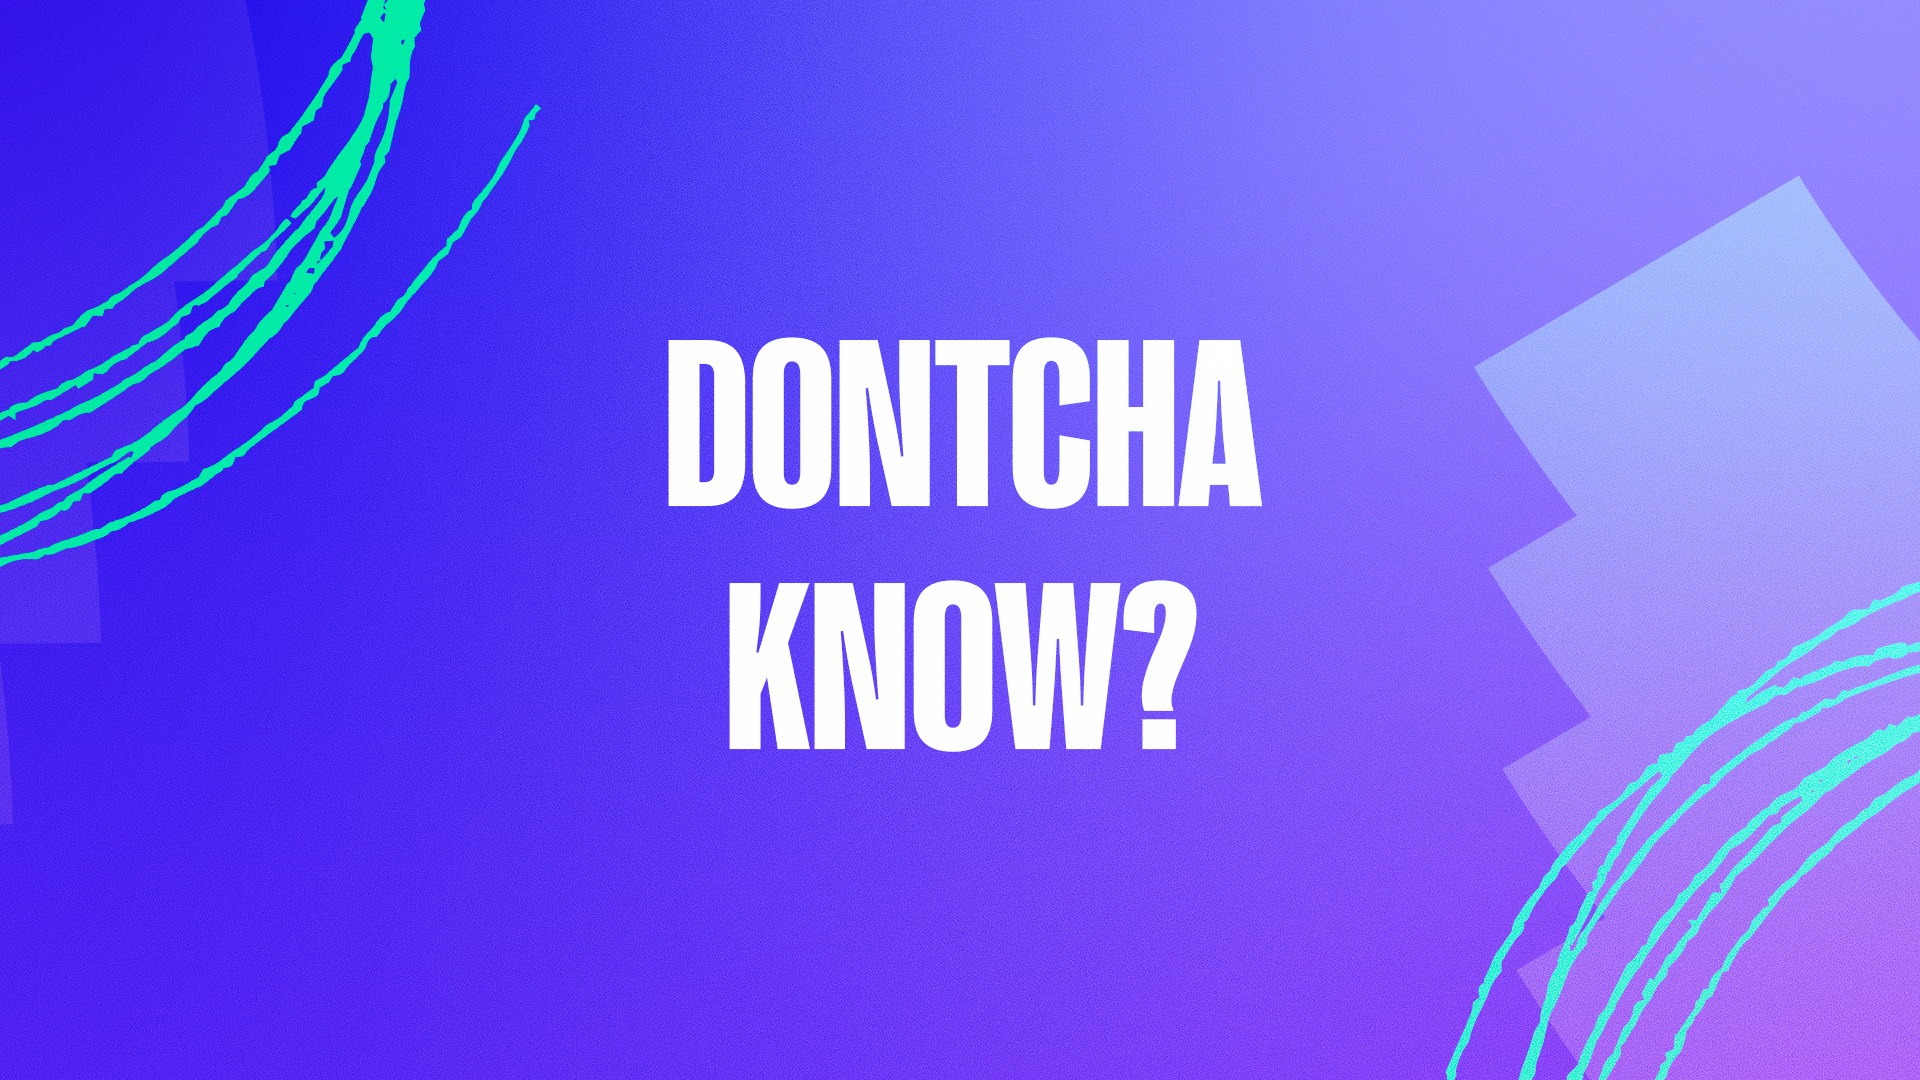 Dontcha know?